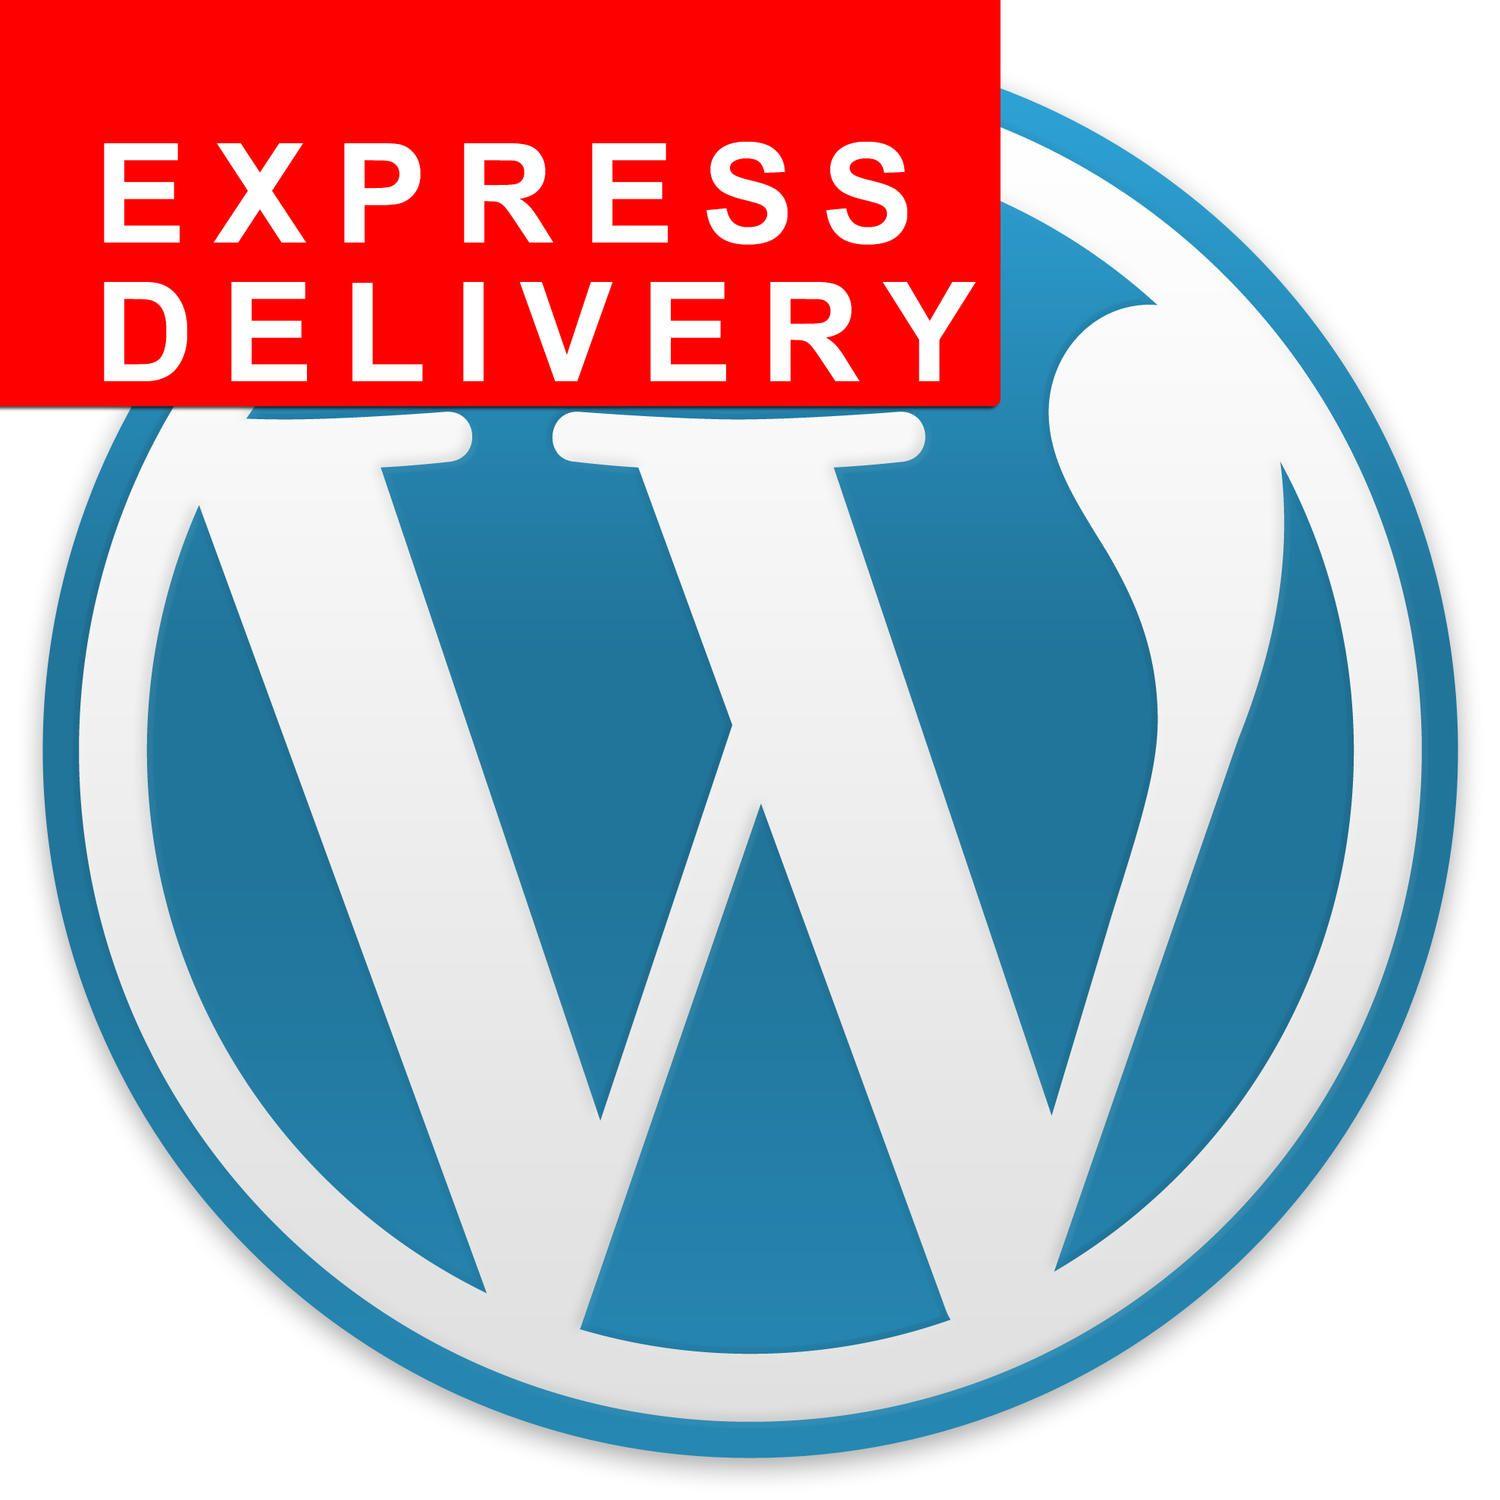 Small WordPress Logo - Fix Small WordPress Issues by nyasro on Envato Studio